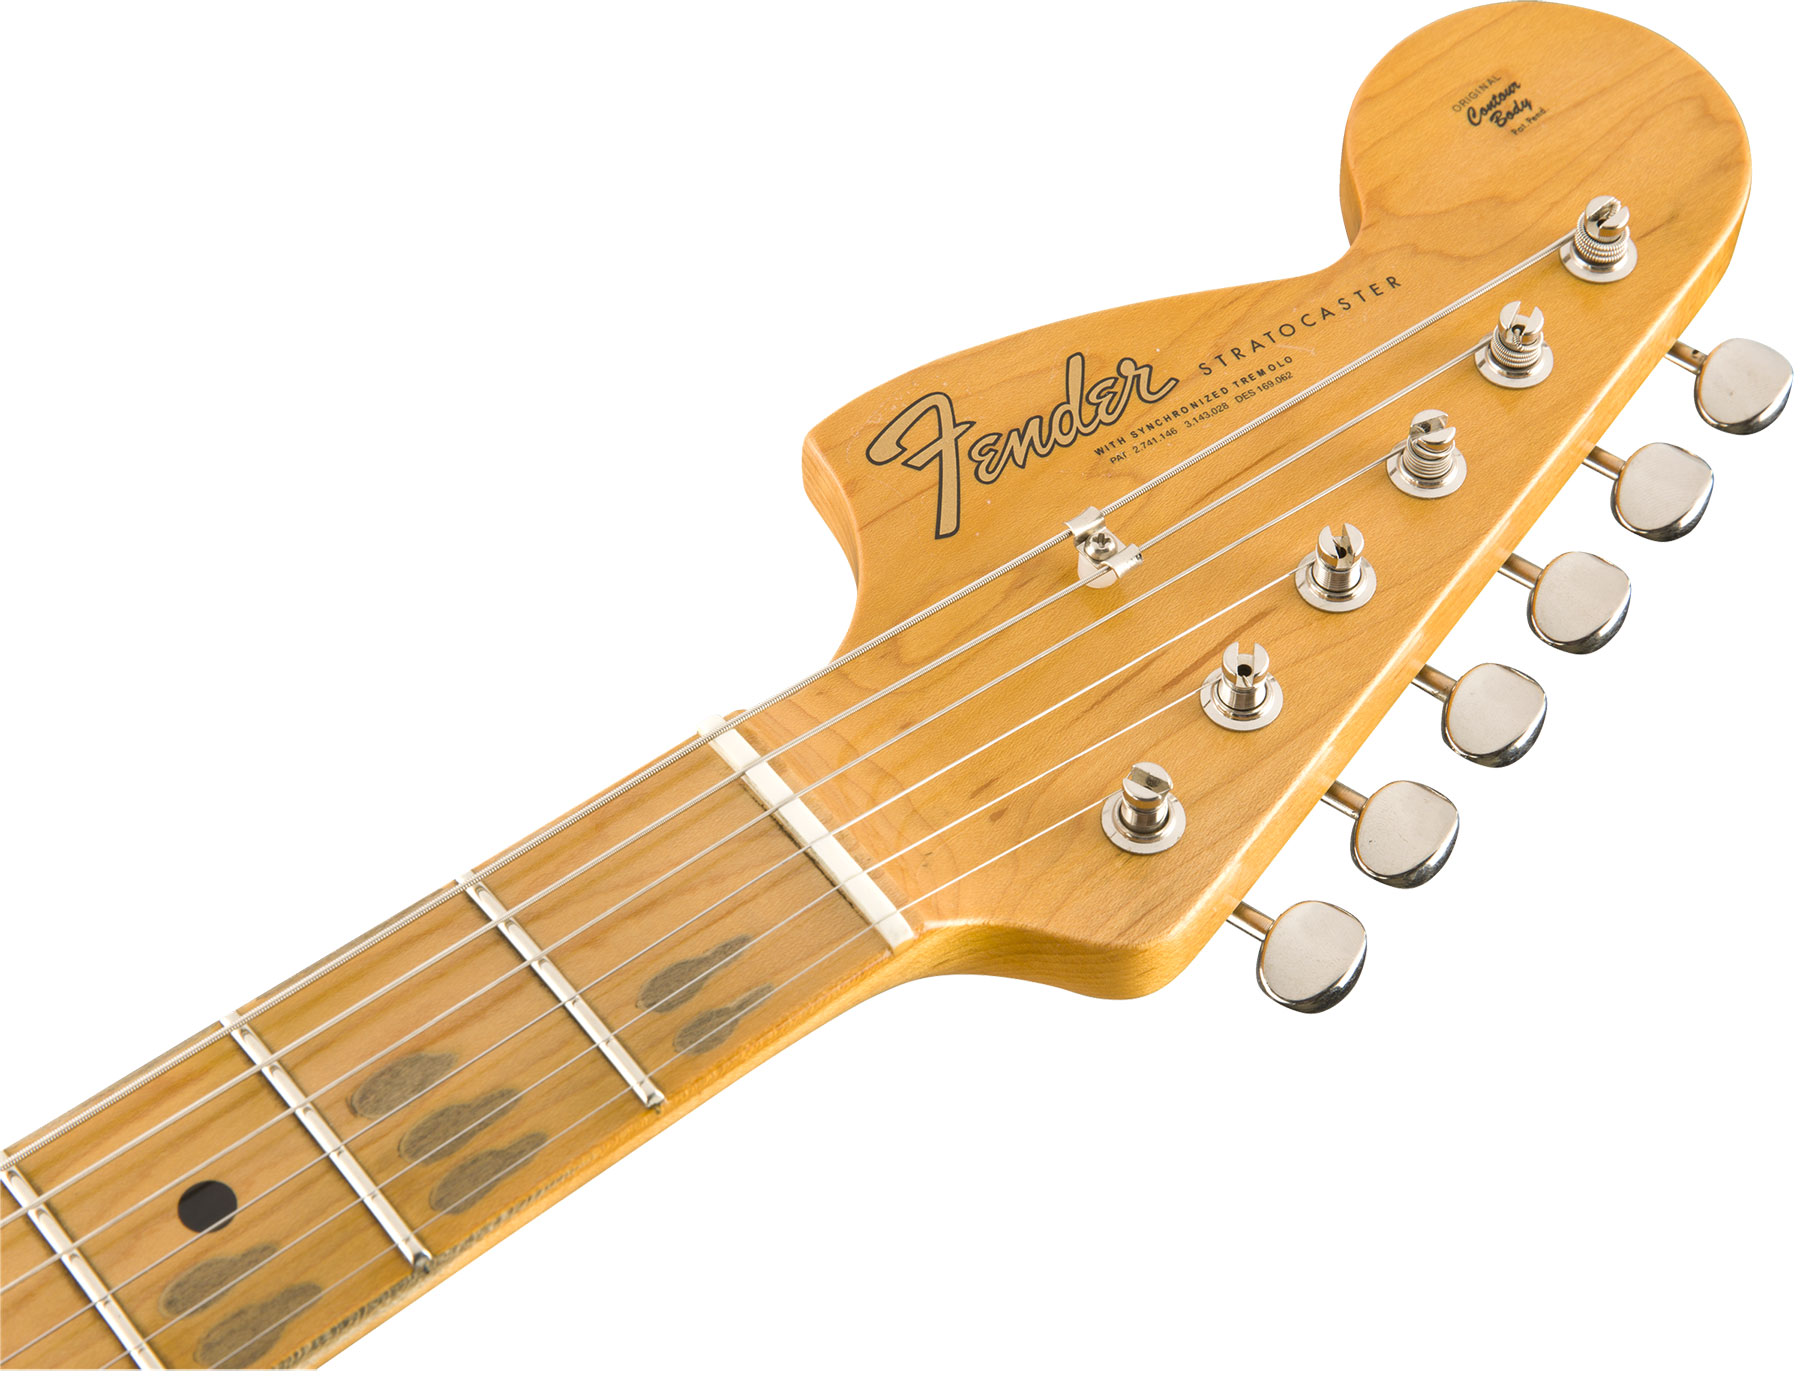 Fender Custom Shop Jimi Hendrix Strat Voodoo Child Signature 2018 Mn - Journeyman Relic Olympic White - Guitare Électrique Forme Str - Variation 3